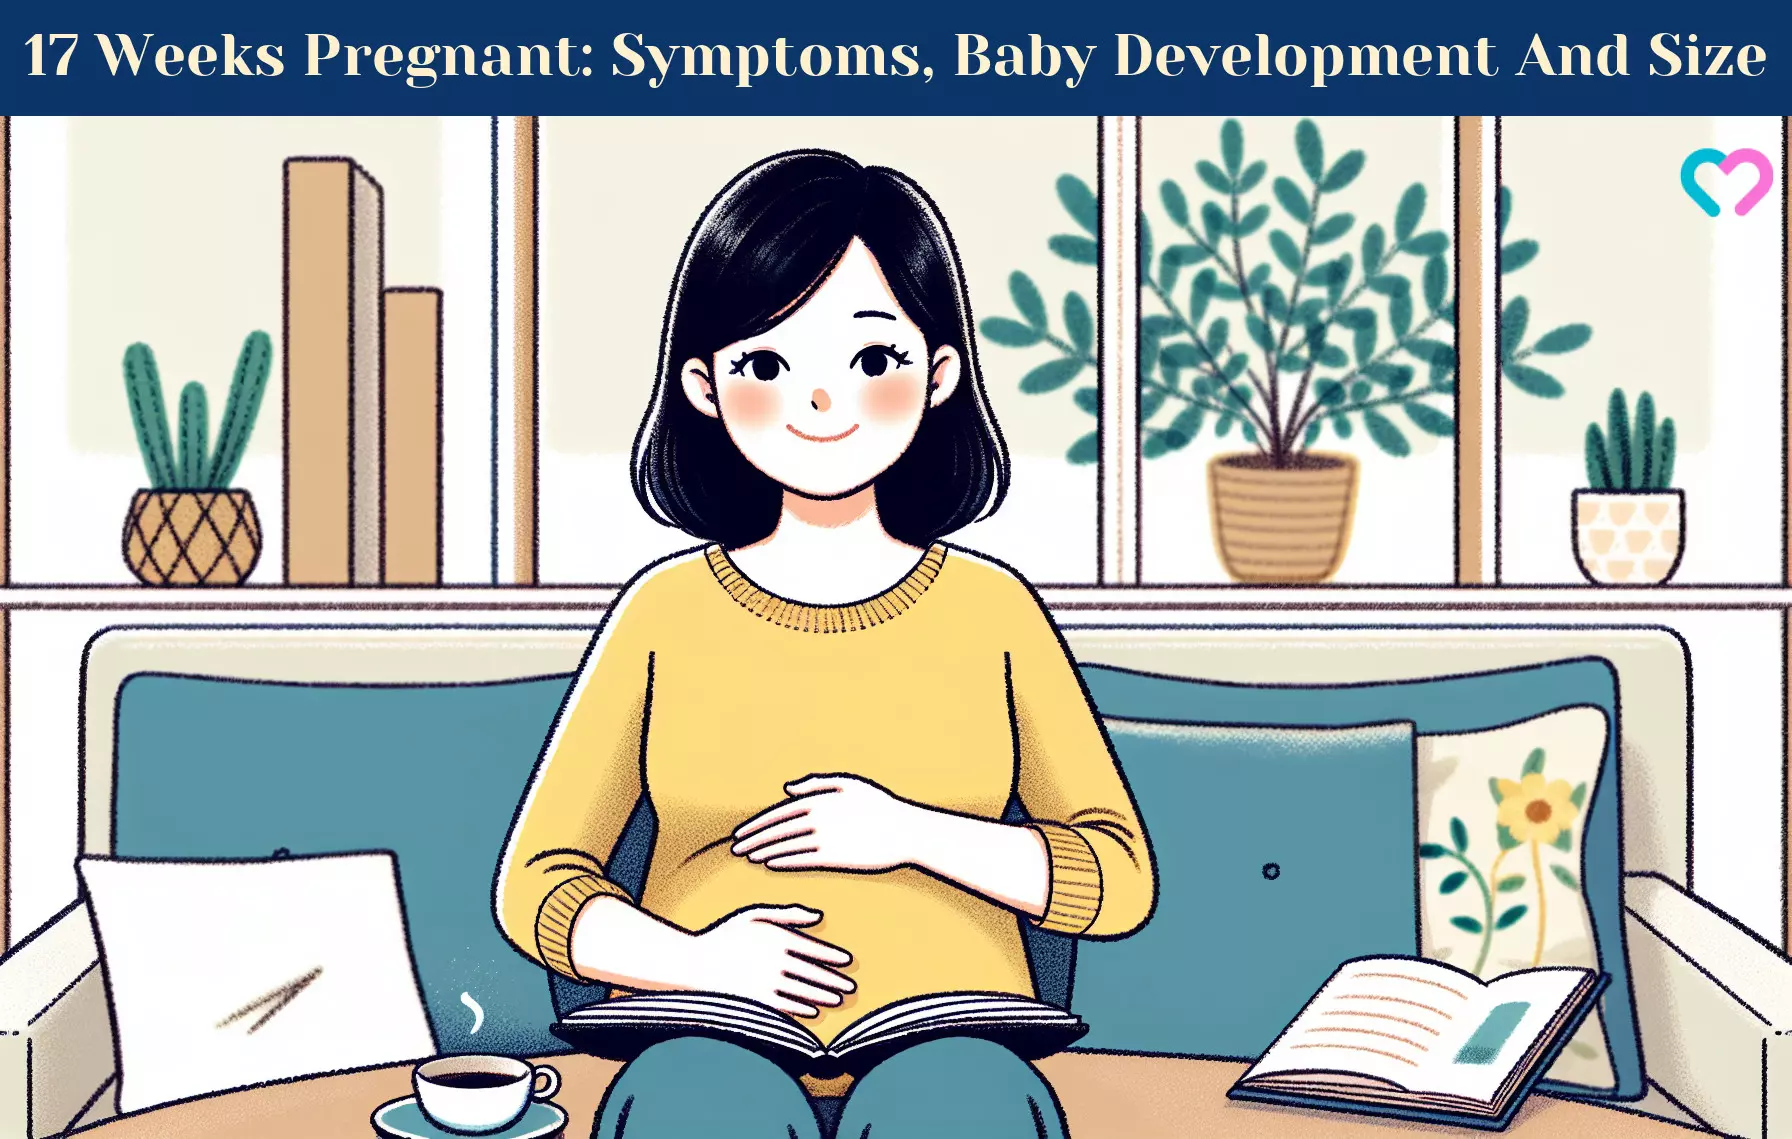 17 weeks pregnant_illustration